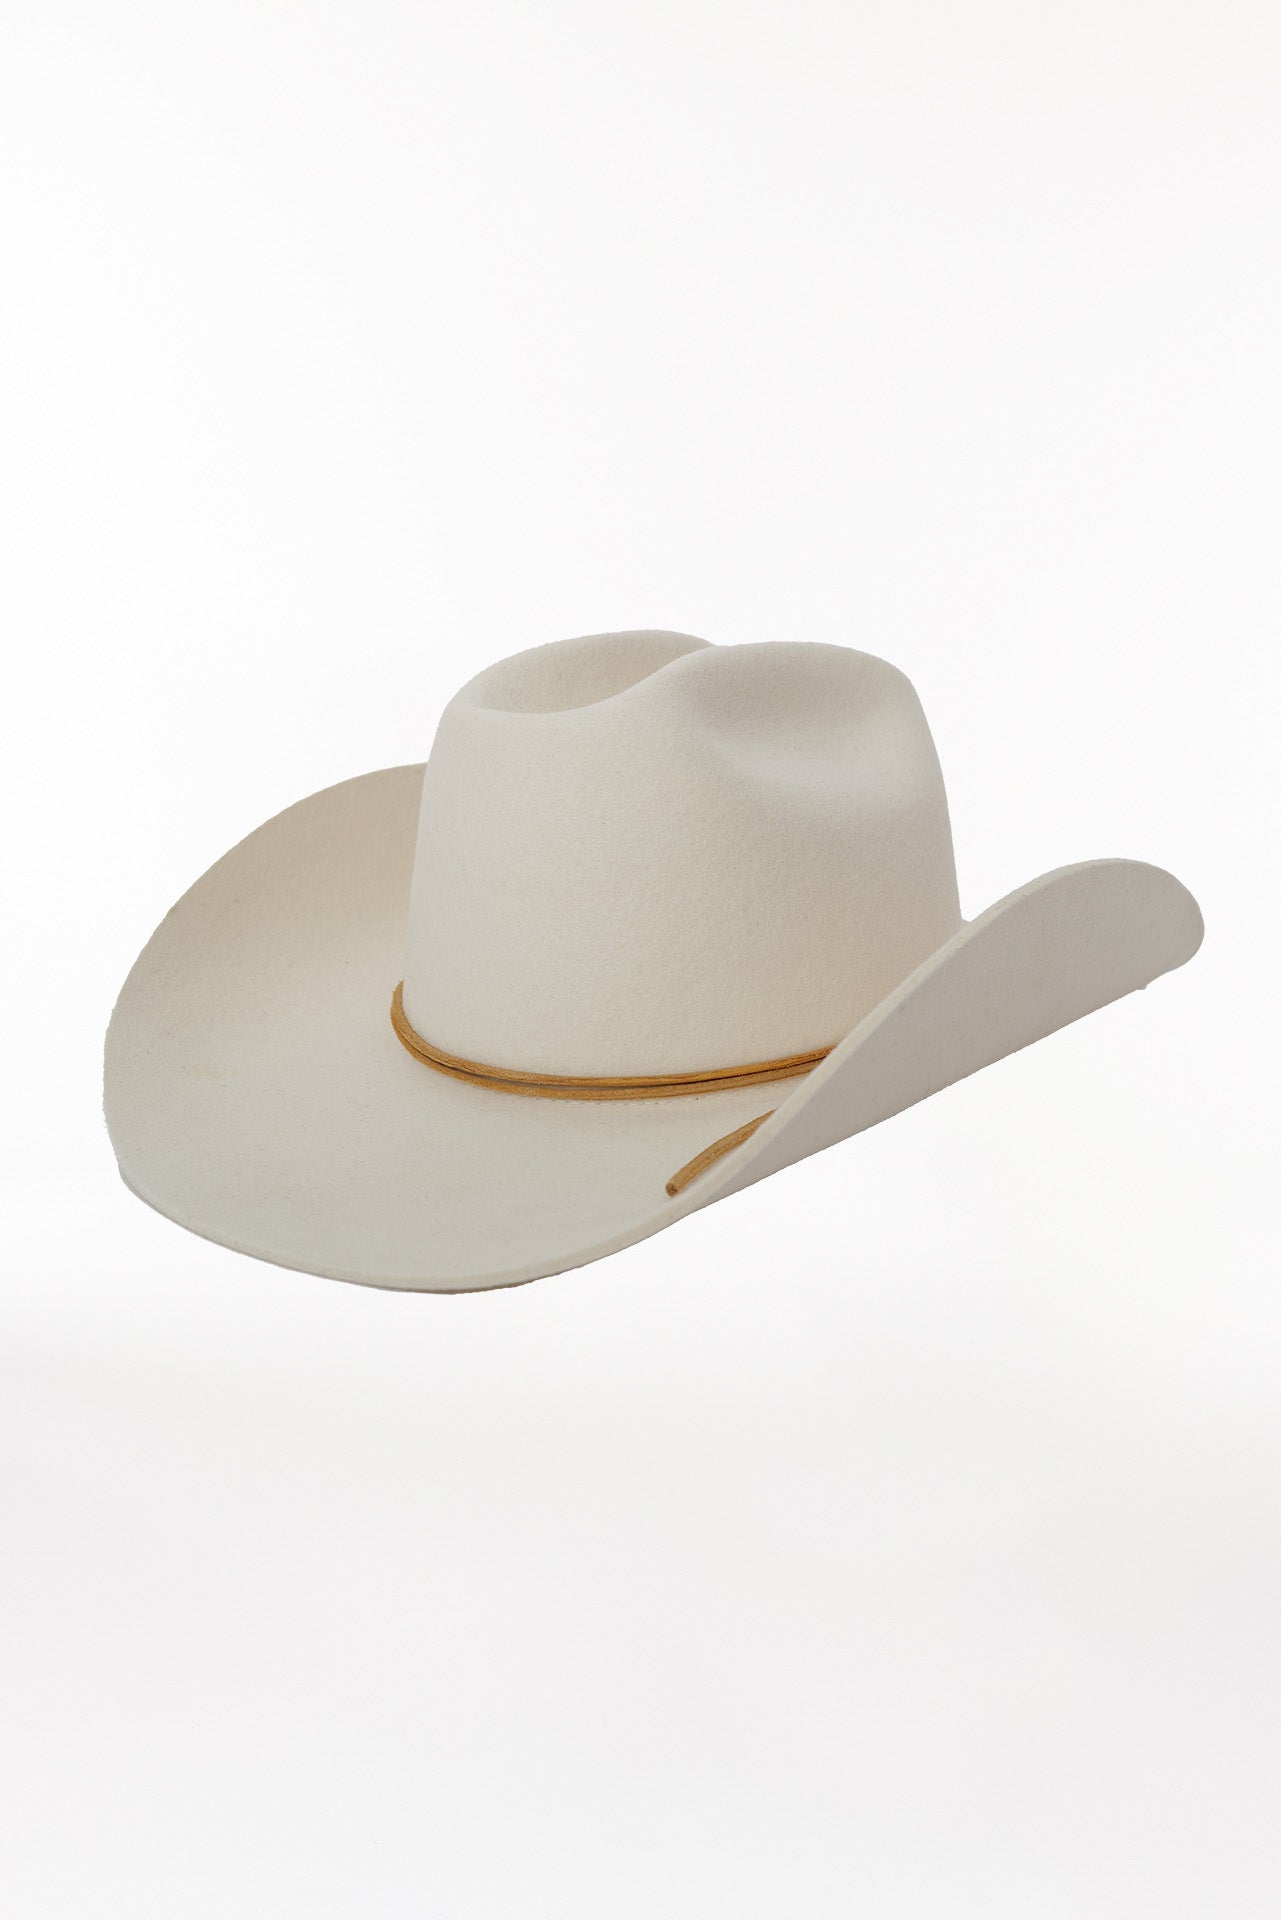 Merino Cowboy Hat Lifted Brim White